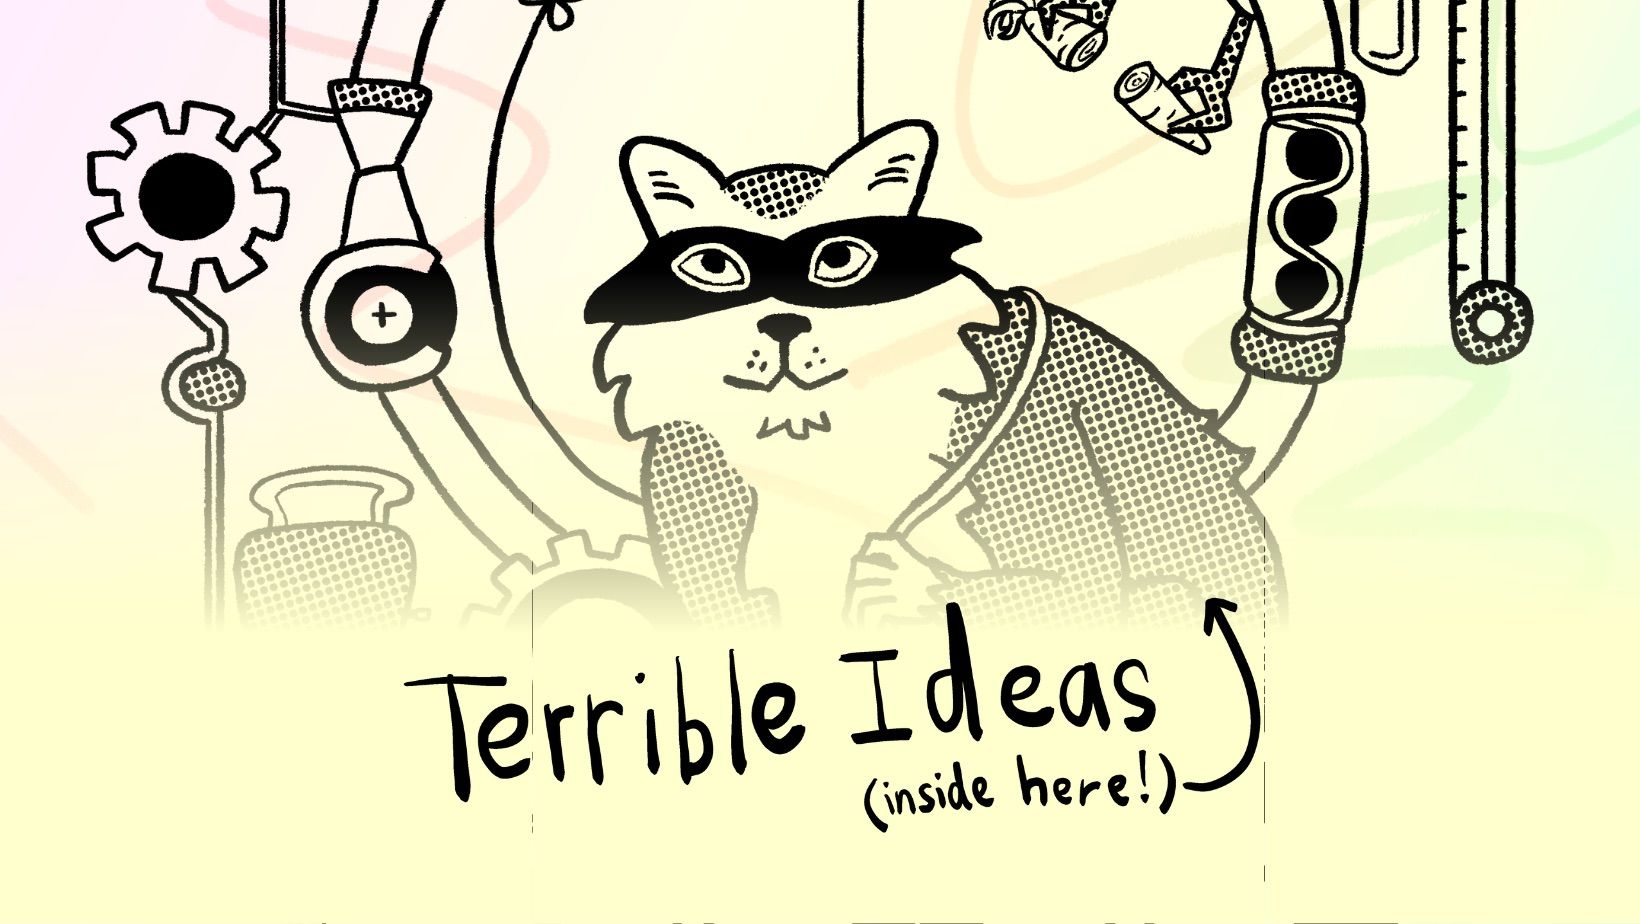 Terrible Ideas Hackathon!